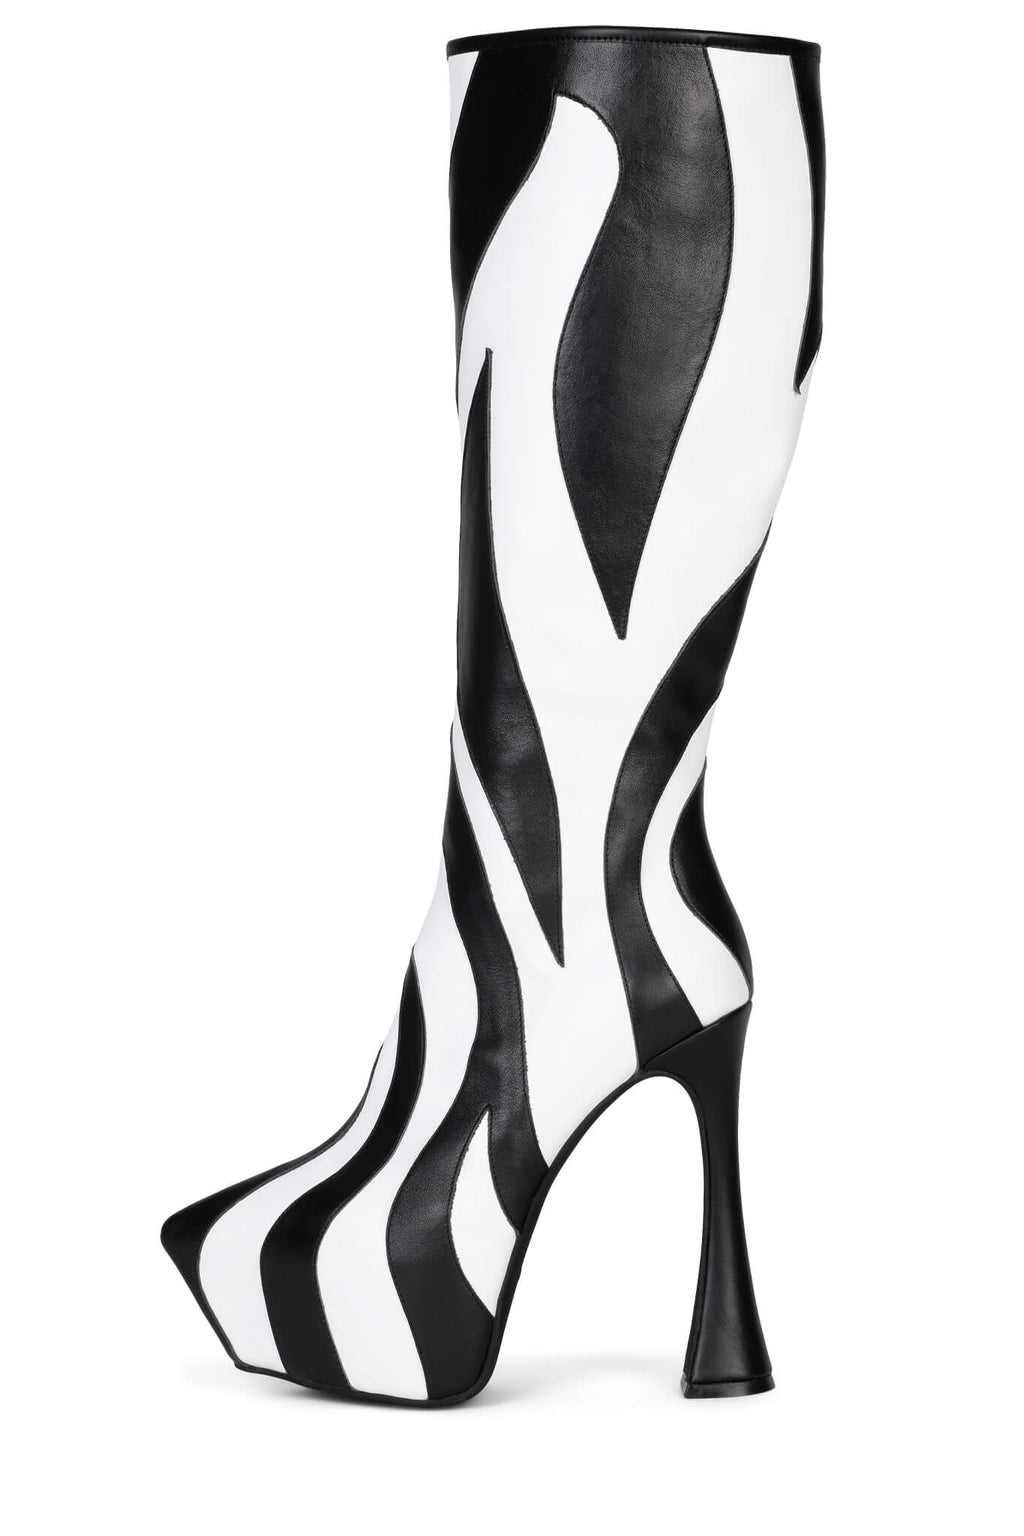 UNTAMED Knee-High Boot Jeffrey Campbell Black White Zebra 6 